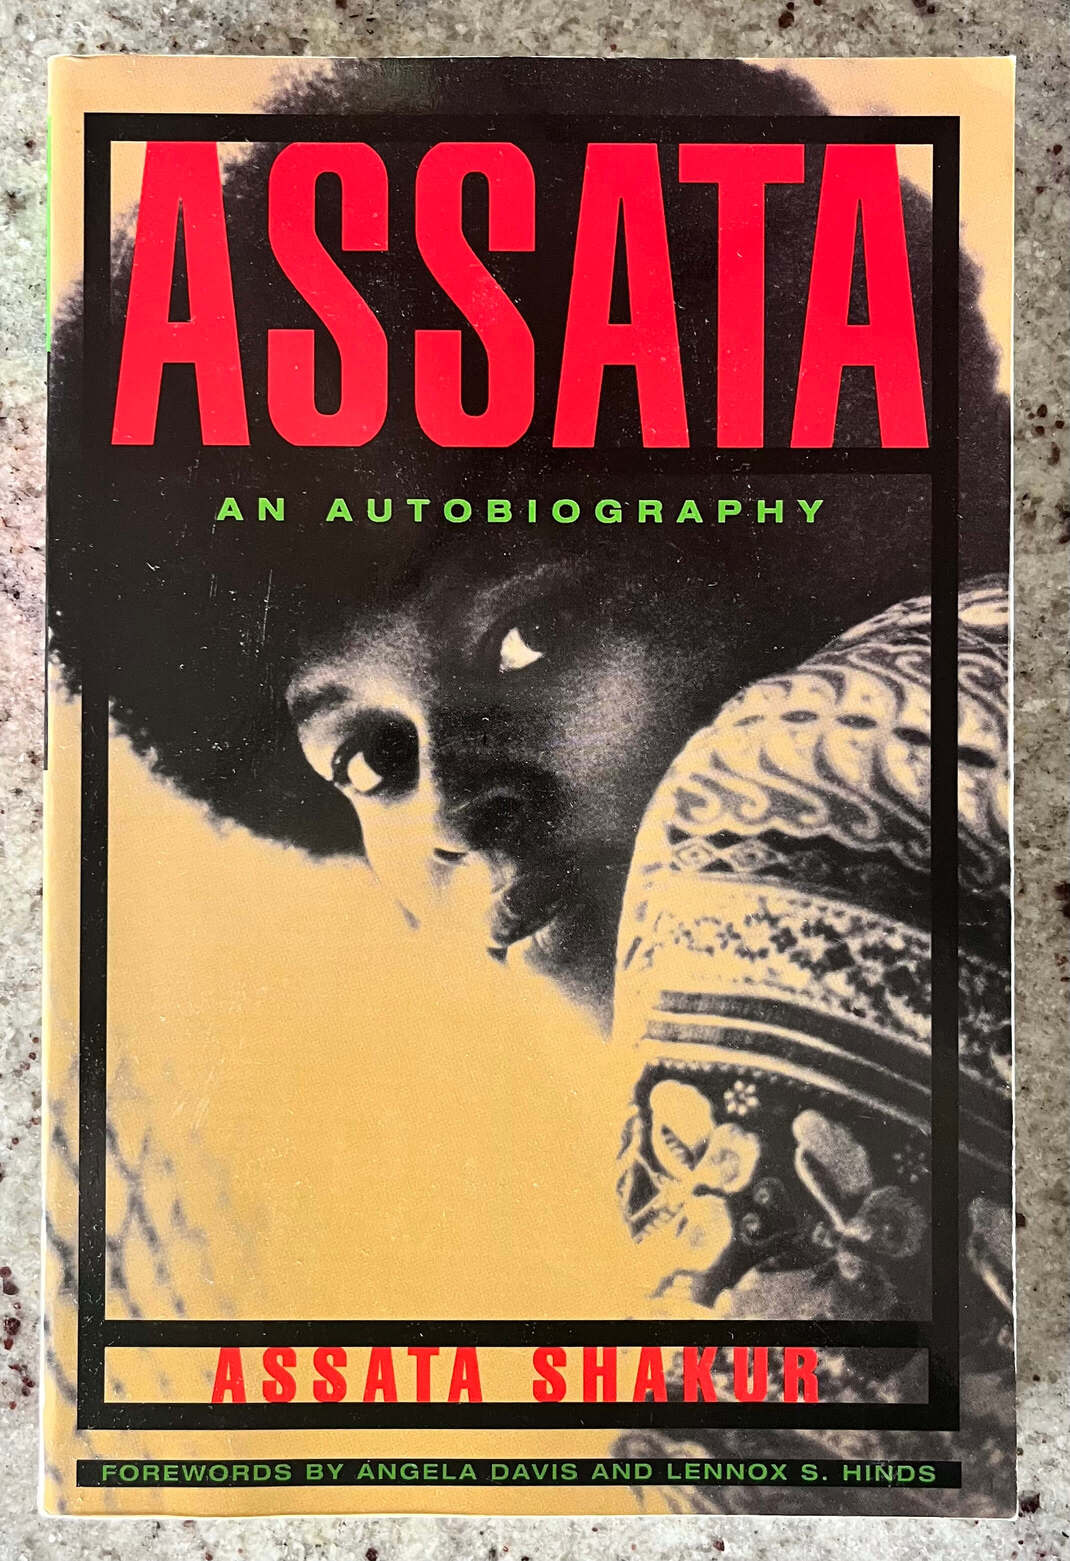 “Assata: An Autobiography” by Assata Shakur. Forewords by Angela Davis and Lennox S. Hinds.